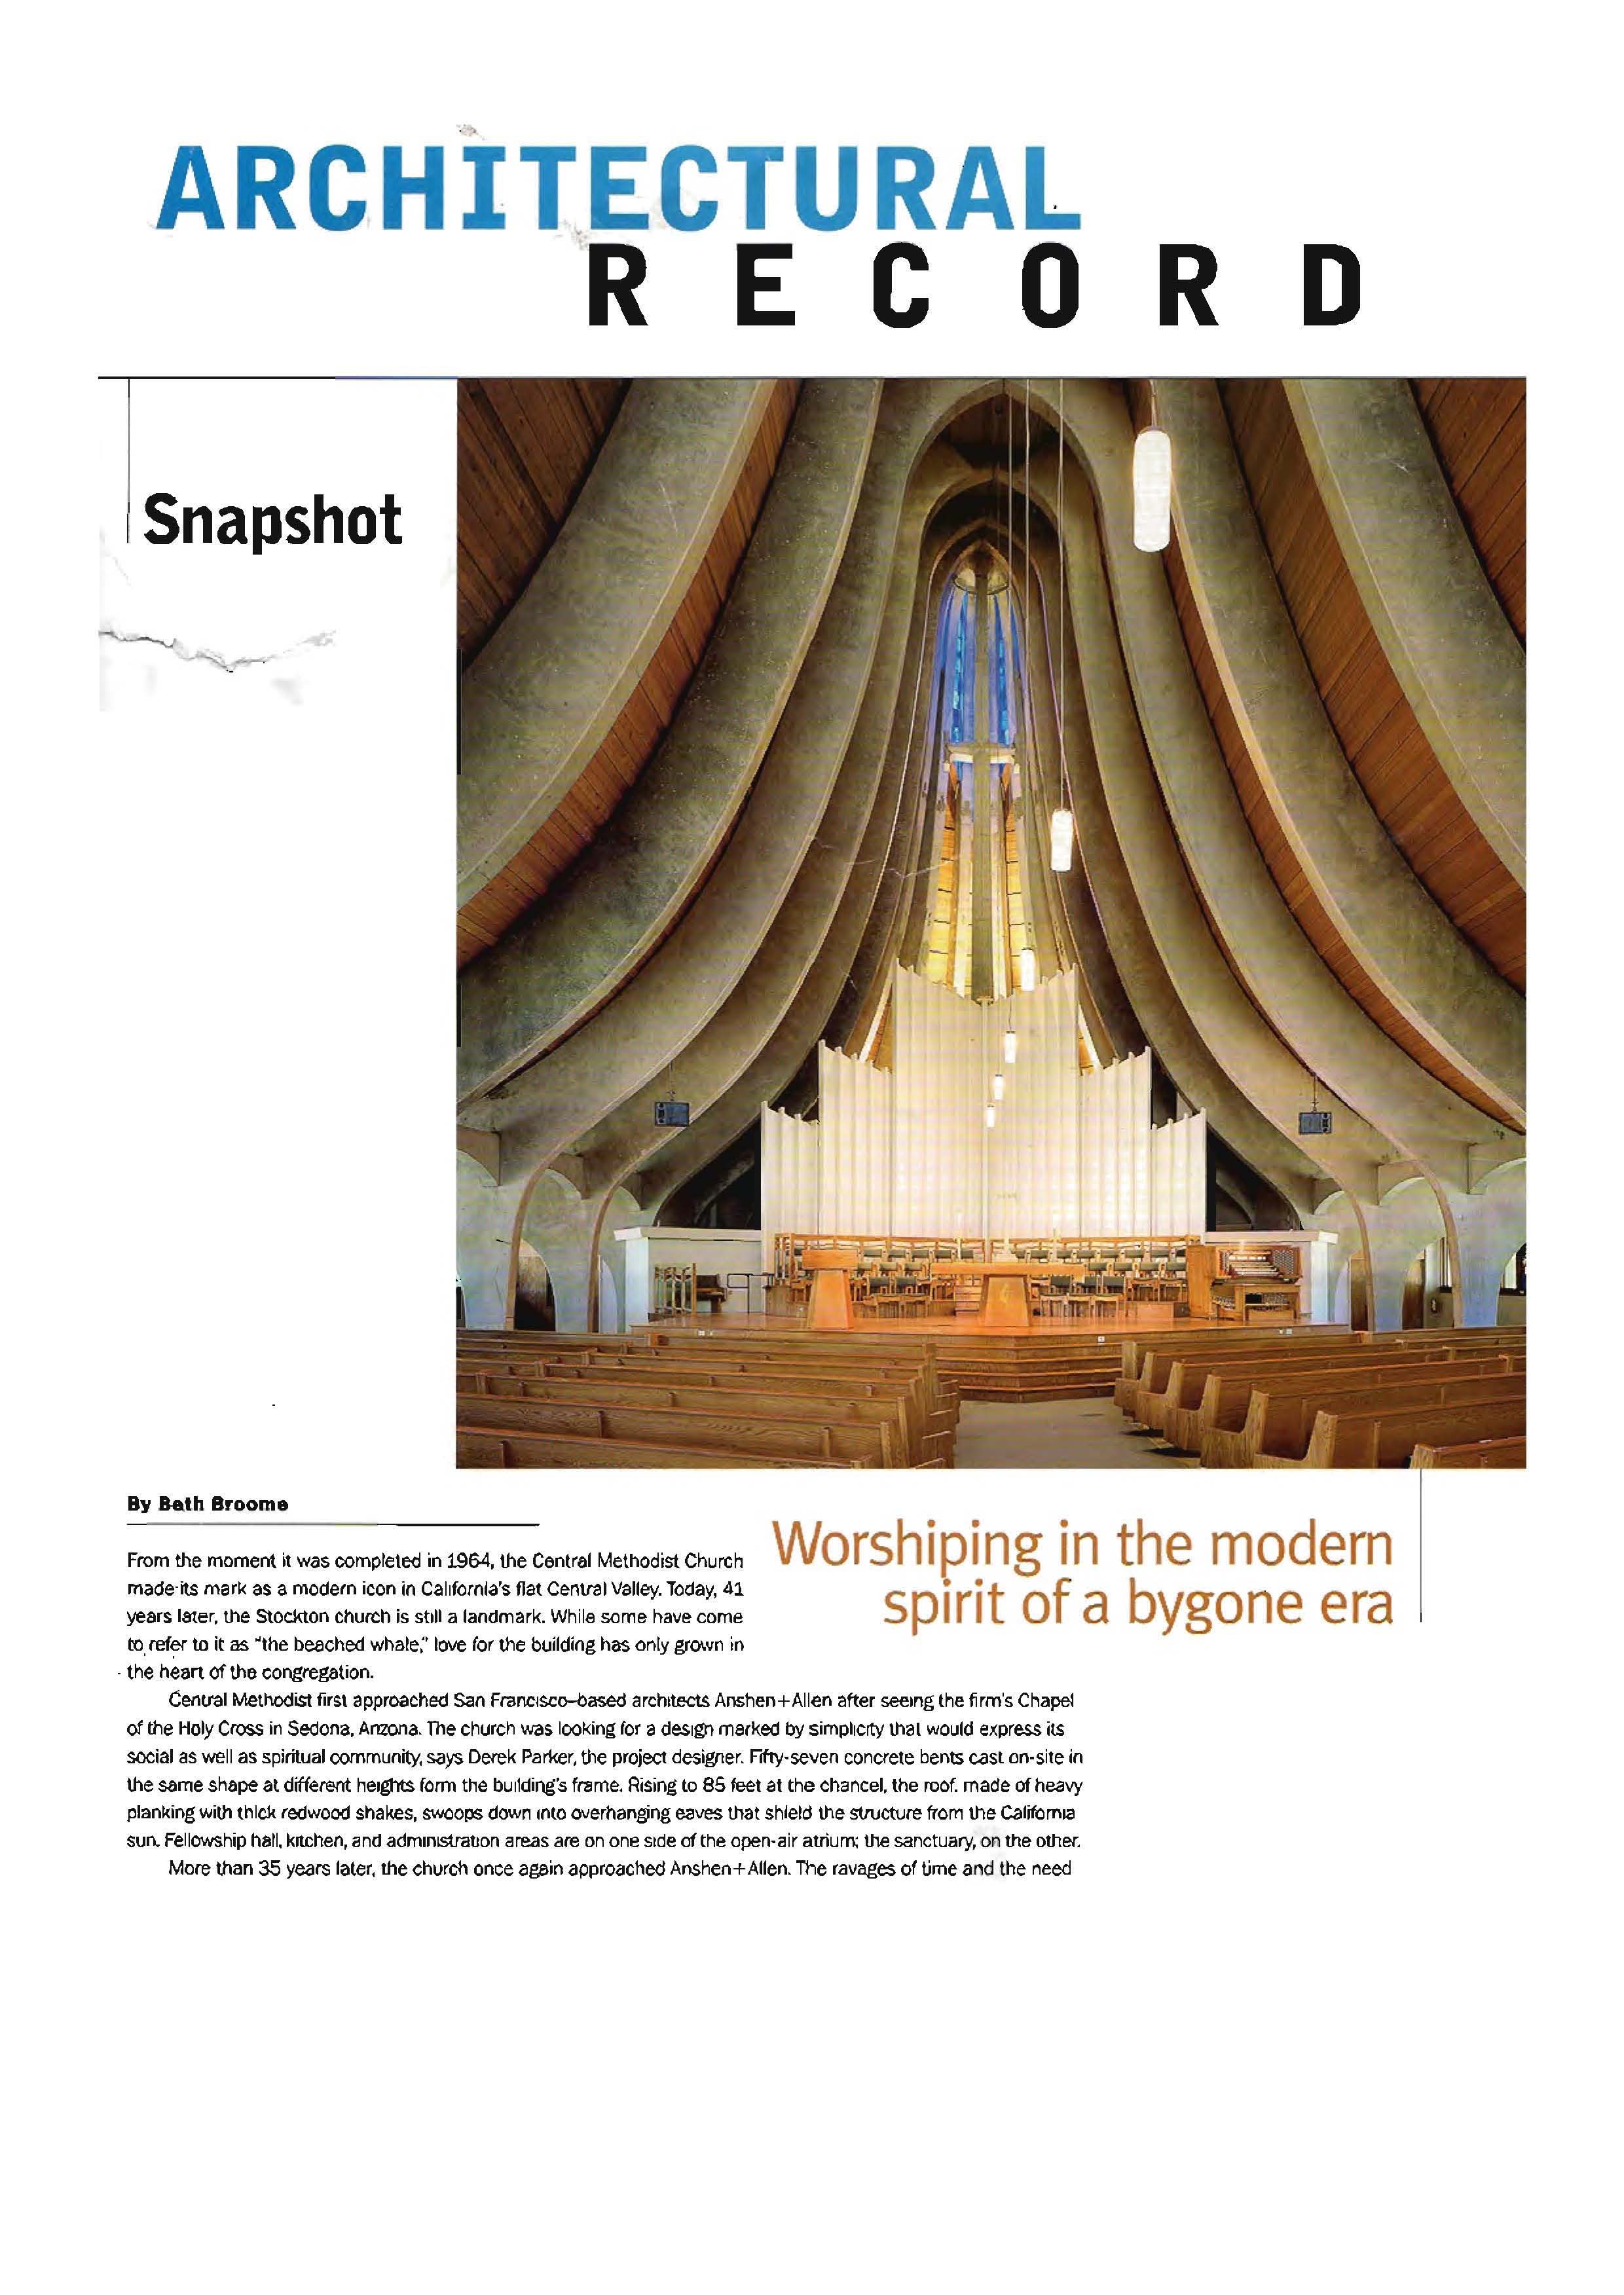 Central Methodist Church: Worshipping with a modern spirit in a bygone era